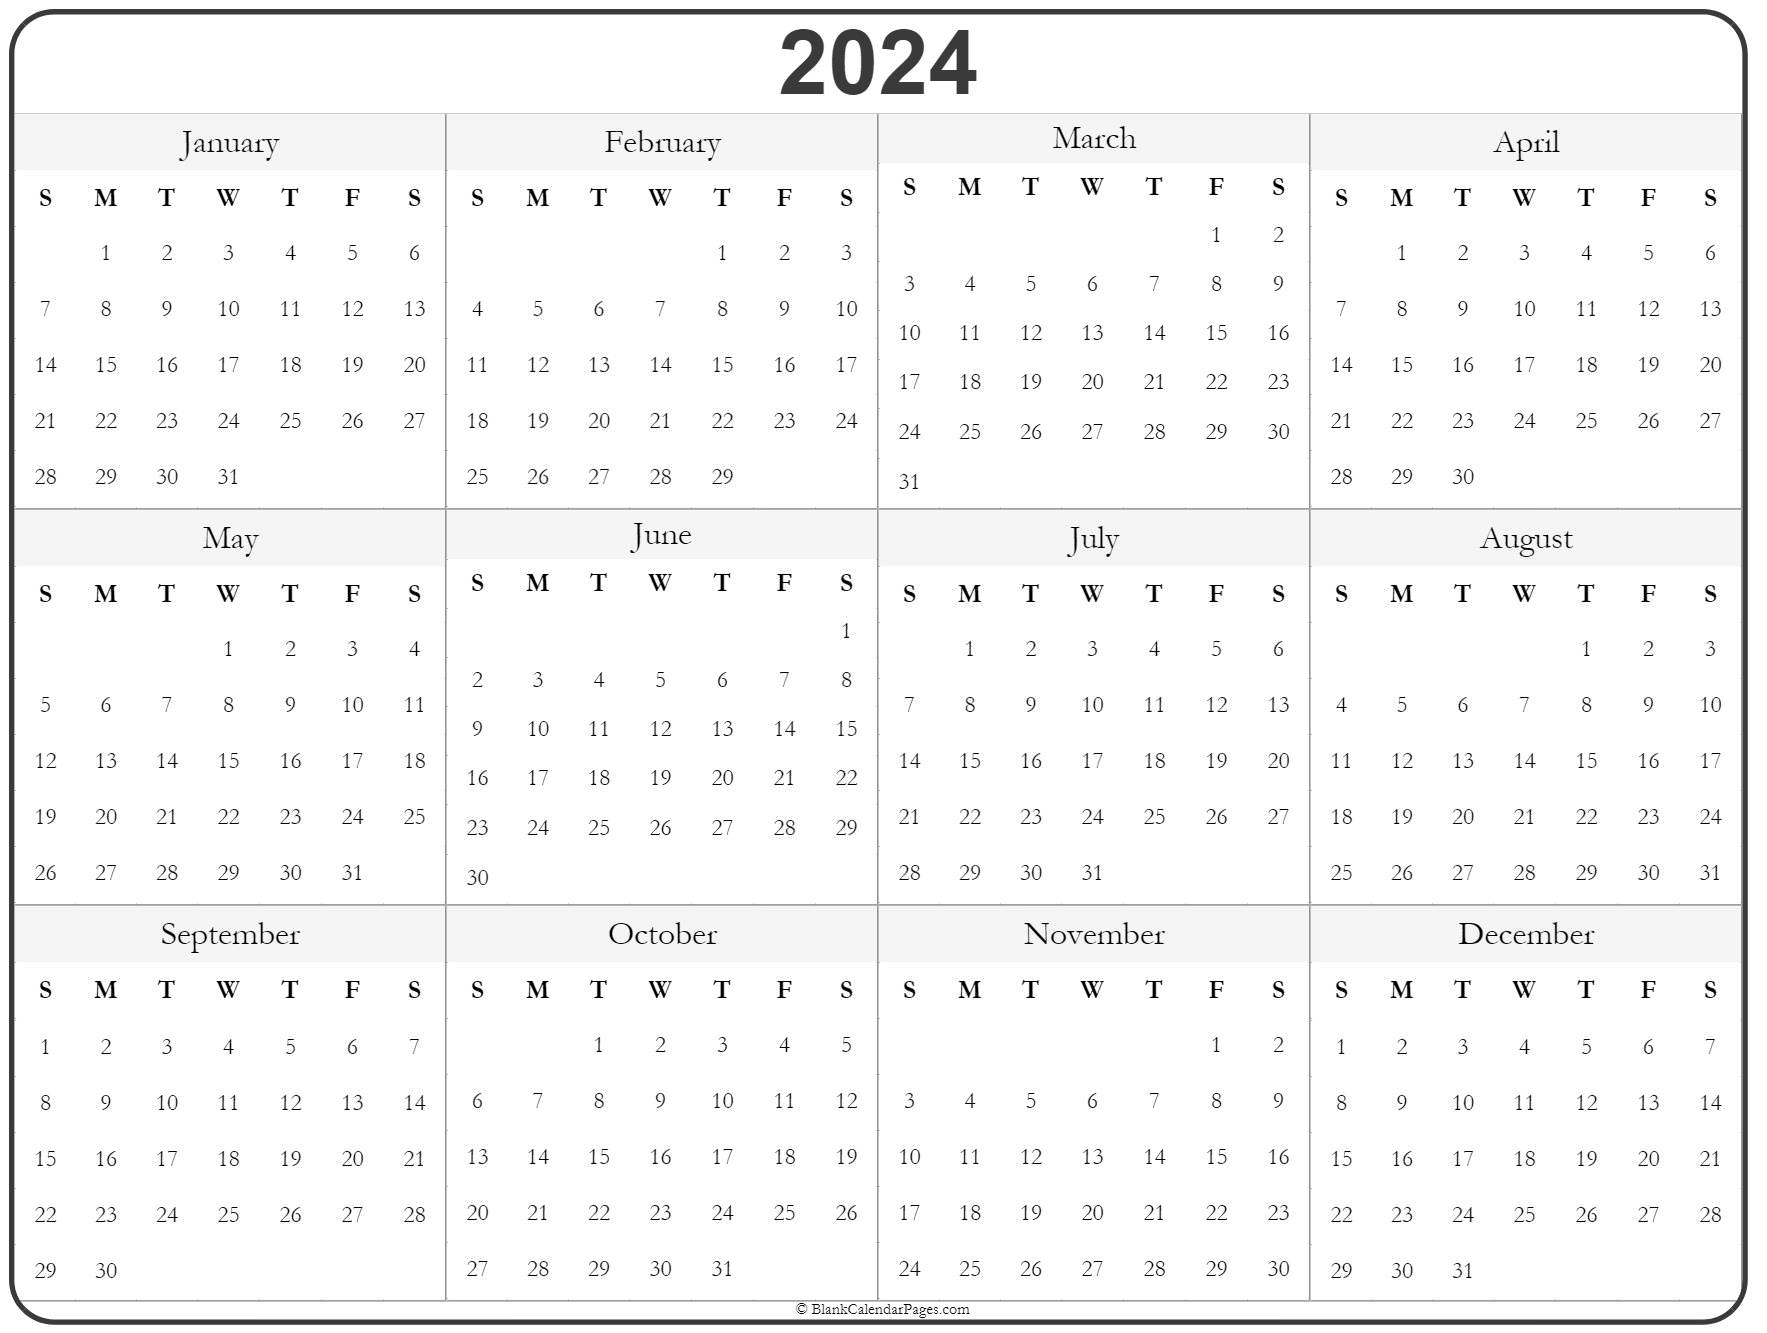 Yearly Calendar 2024 Calendar Quickly 2024 Yearly Calendar - Free Printable 1 Year Calendar 2024